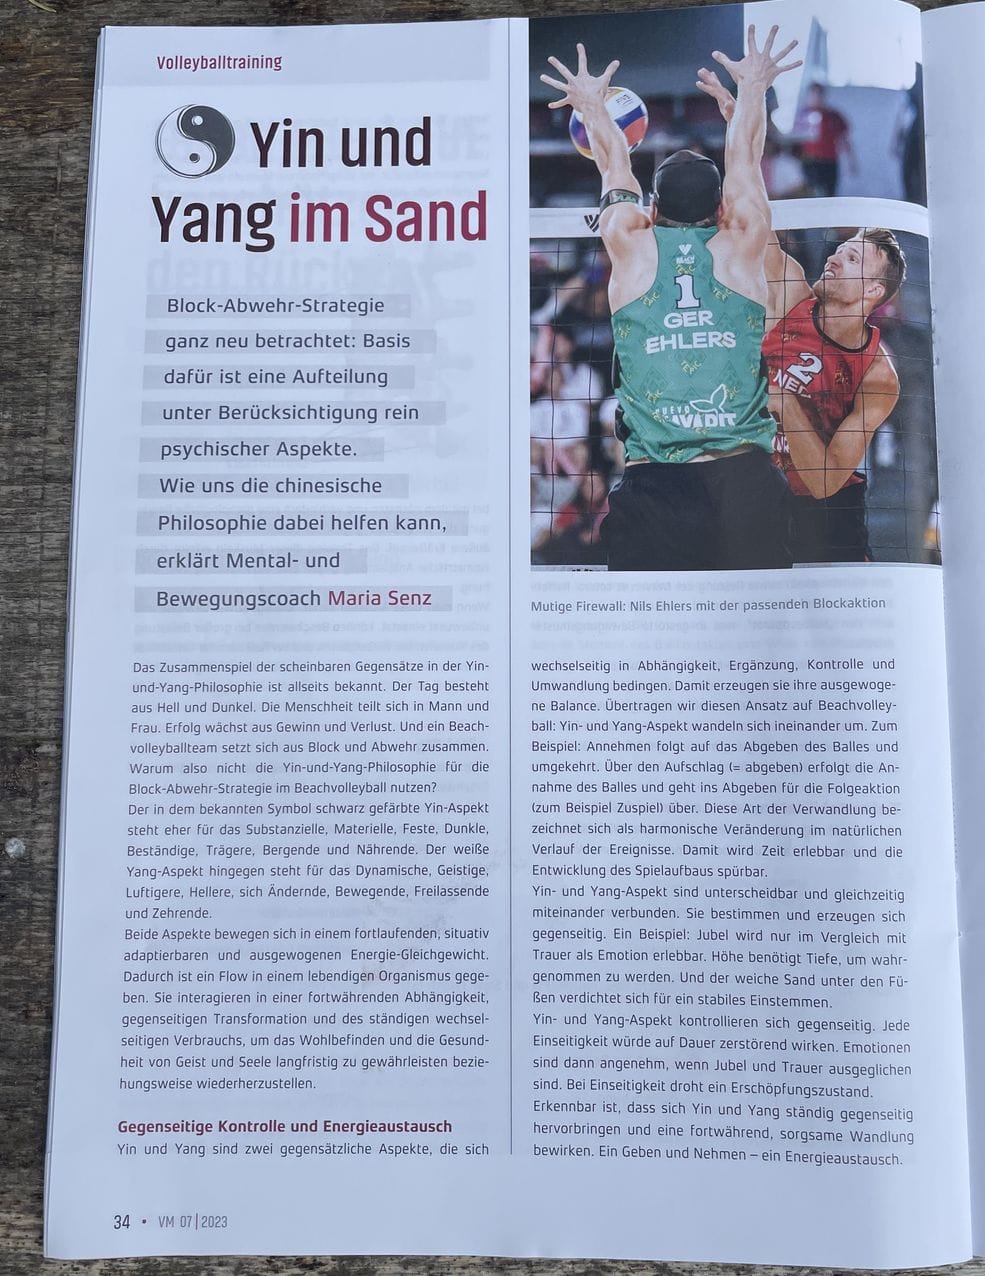 Volleyball Magazin 07/2023